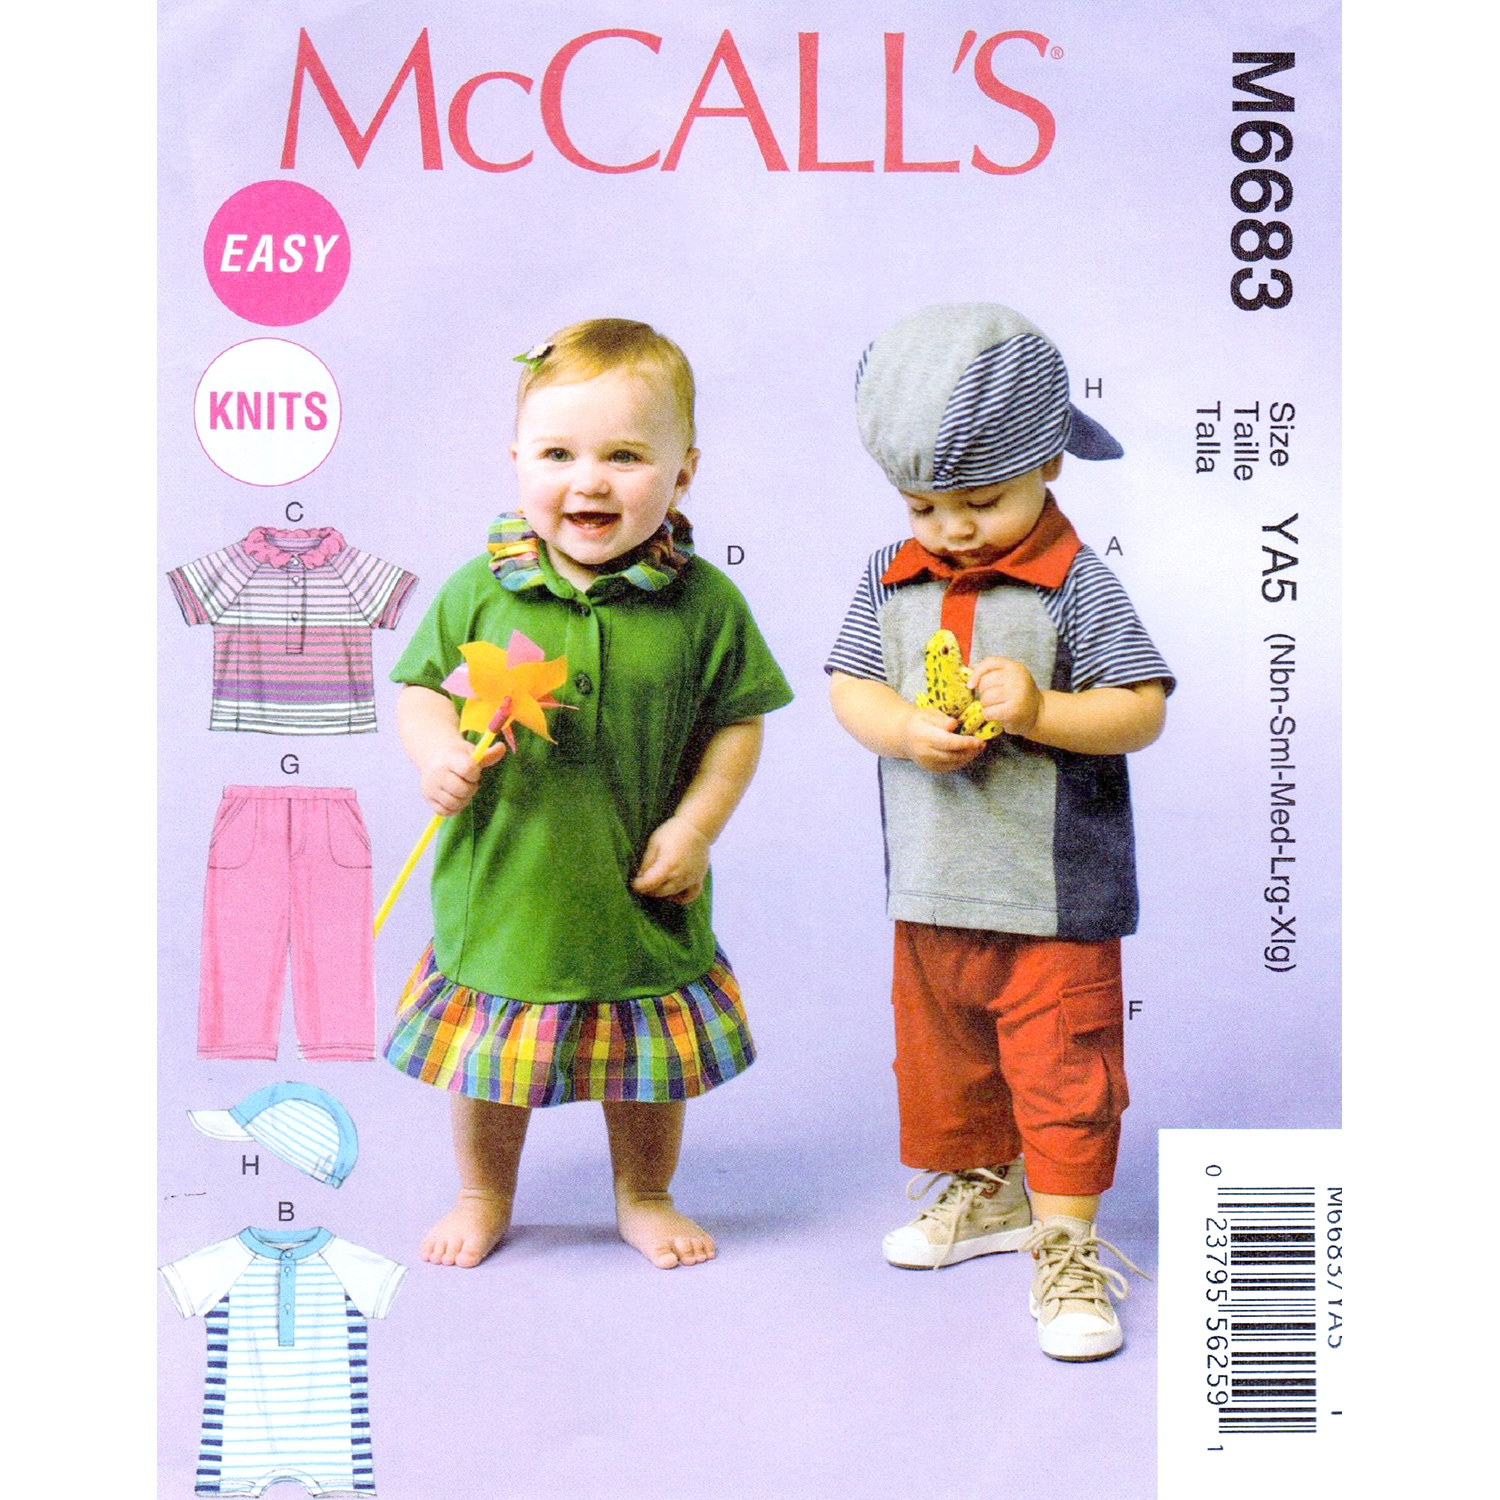 McCalls 6683 kids pattern